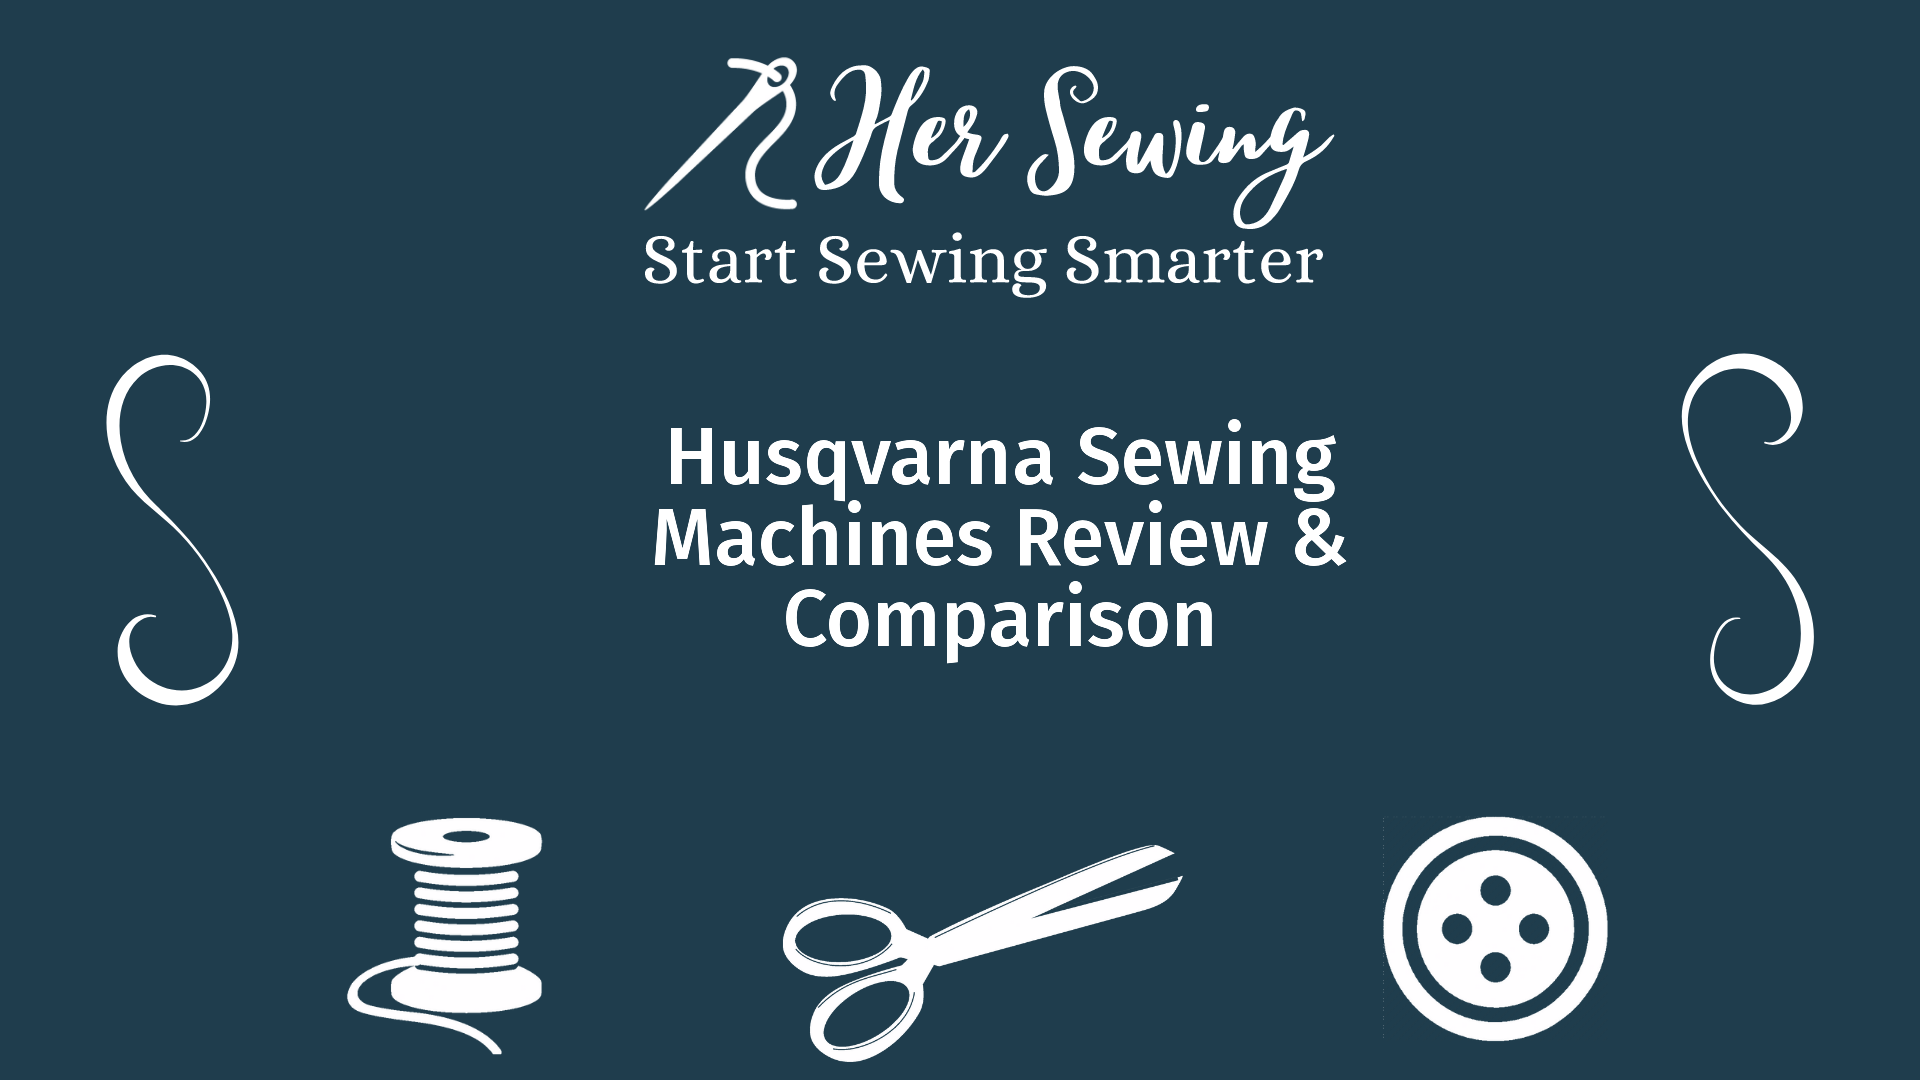 Husqvarna Sewing Machines Review & Comparison